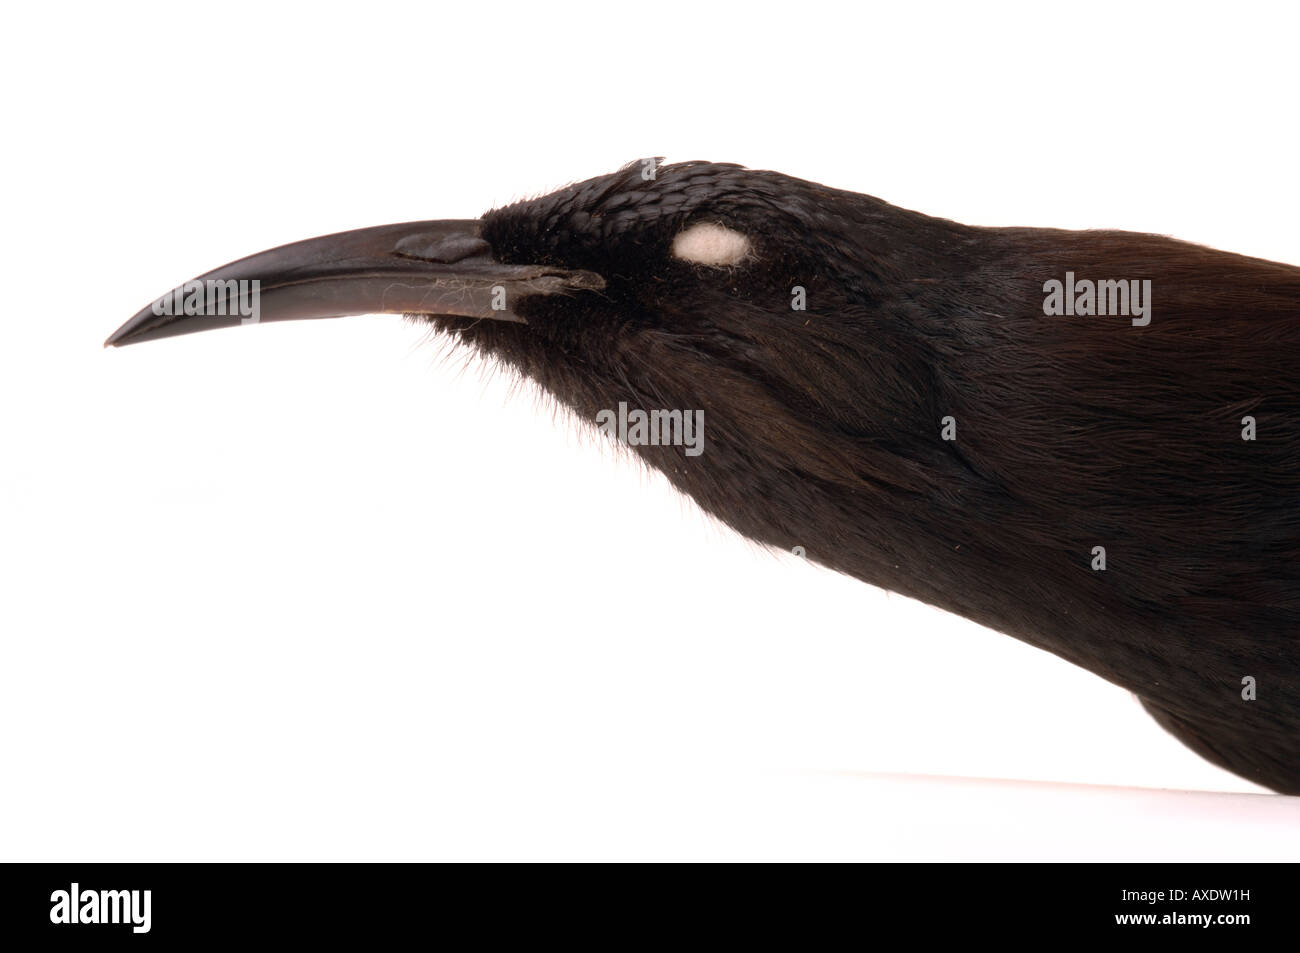 Extinct bird, Moho nobilis, Hawaii Oo, YPM 36964, Yale Peabody Museum collection Stock Photo